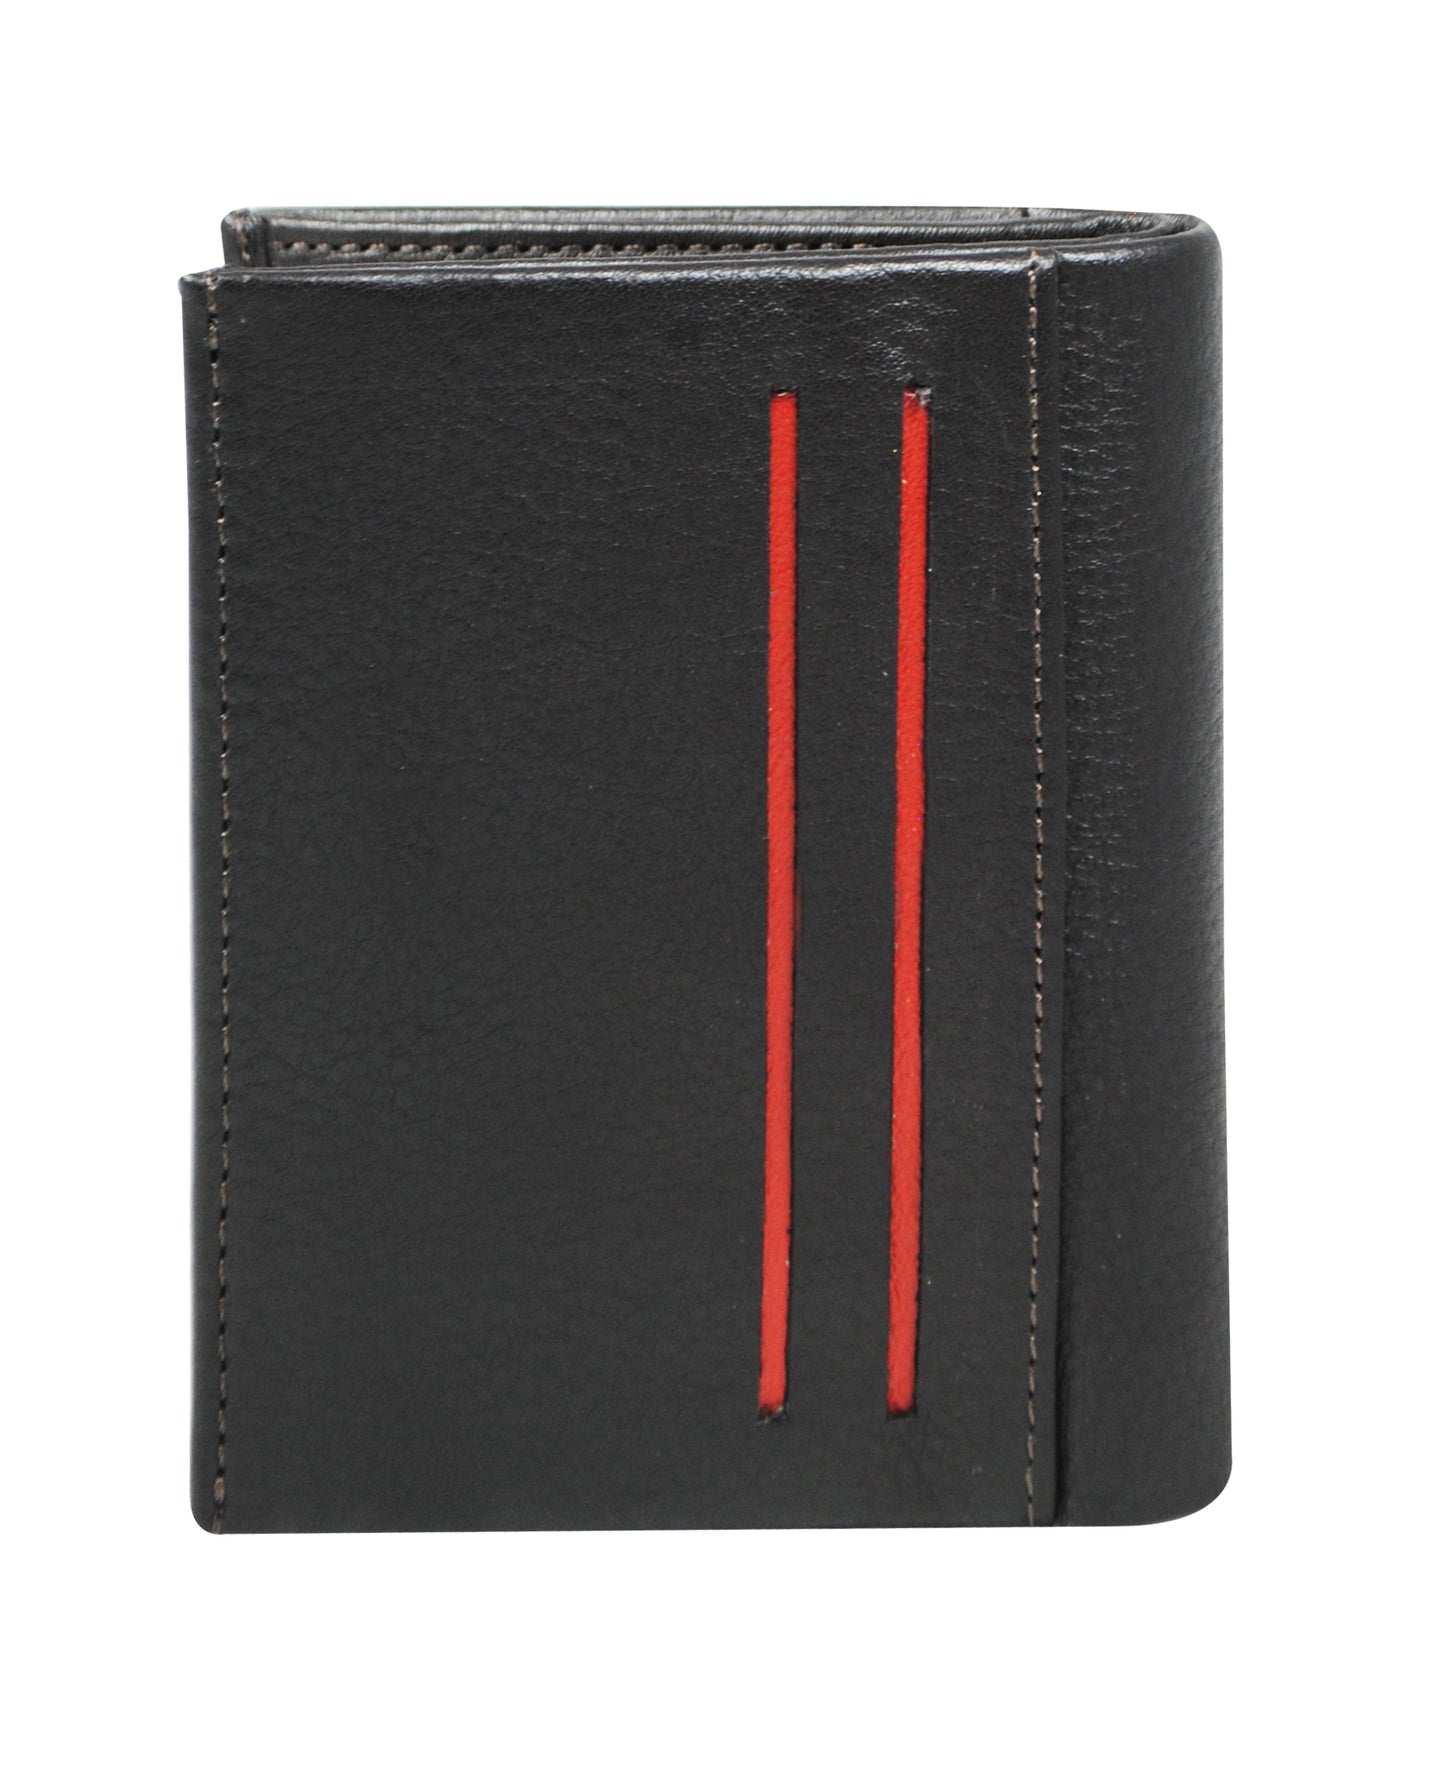 Calfnero Men's Genuine Leather Card Case wallet (S-30-Black)